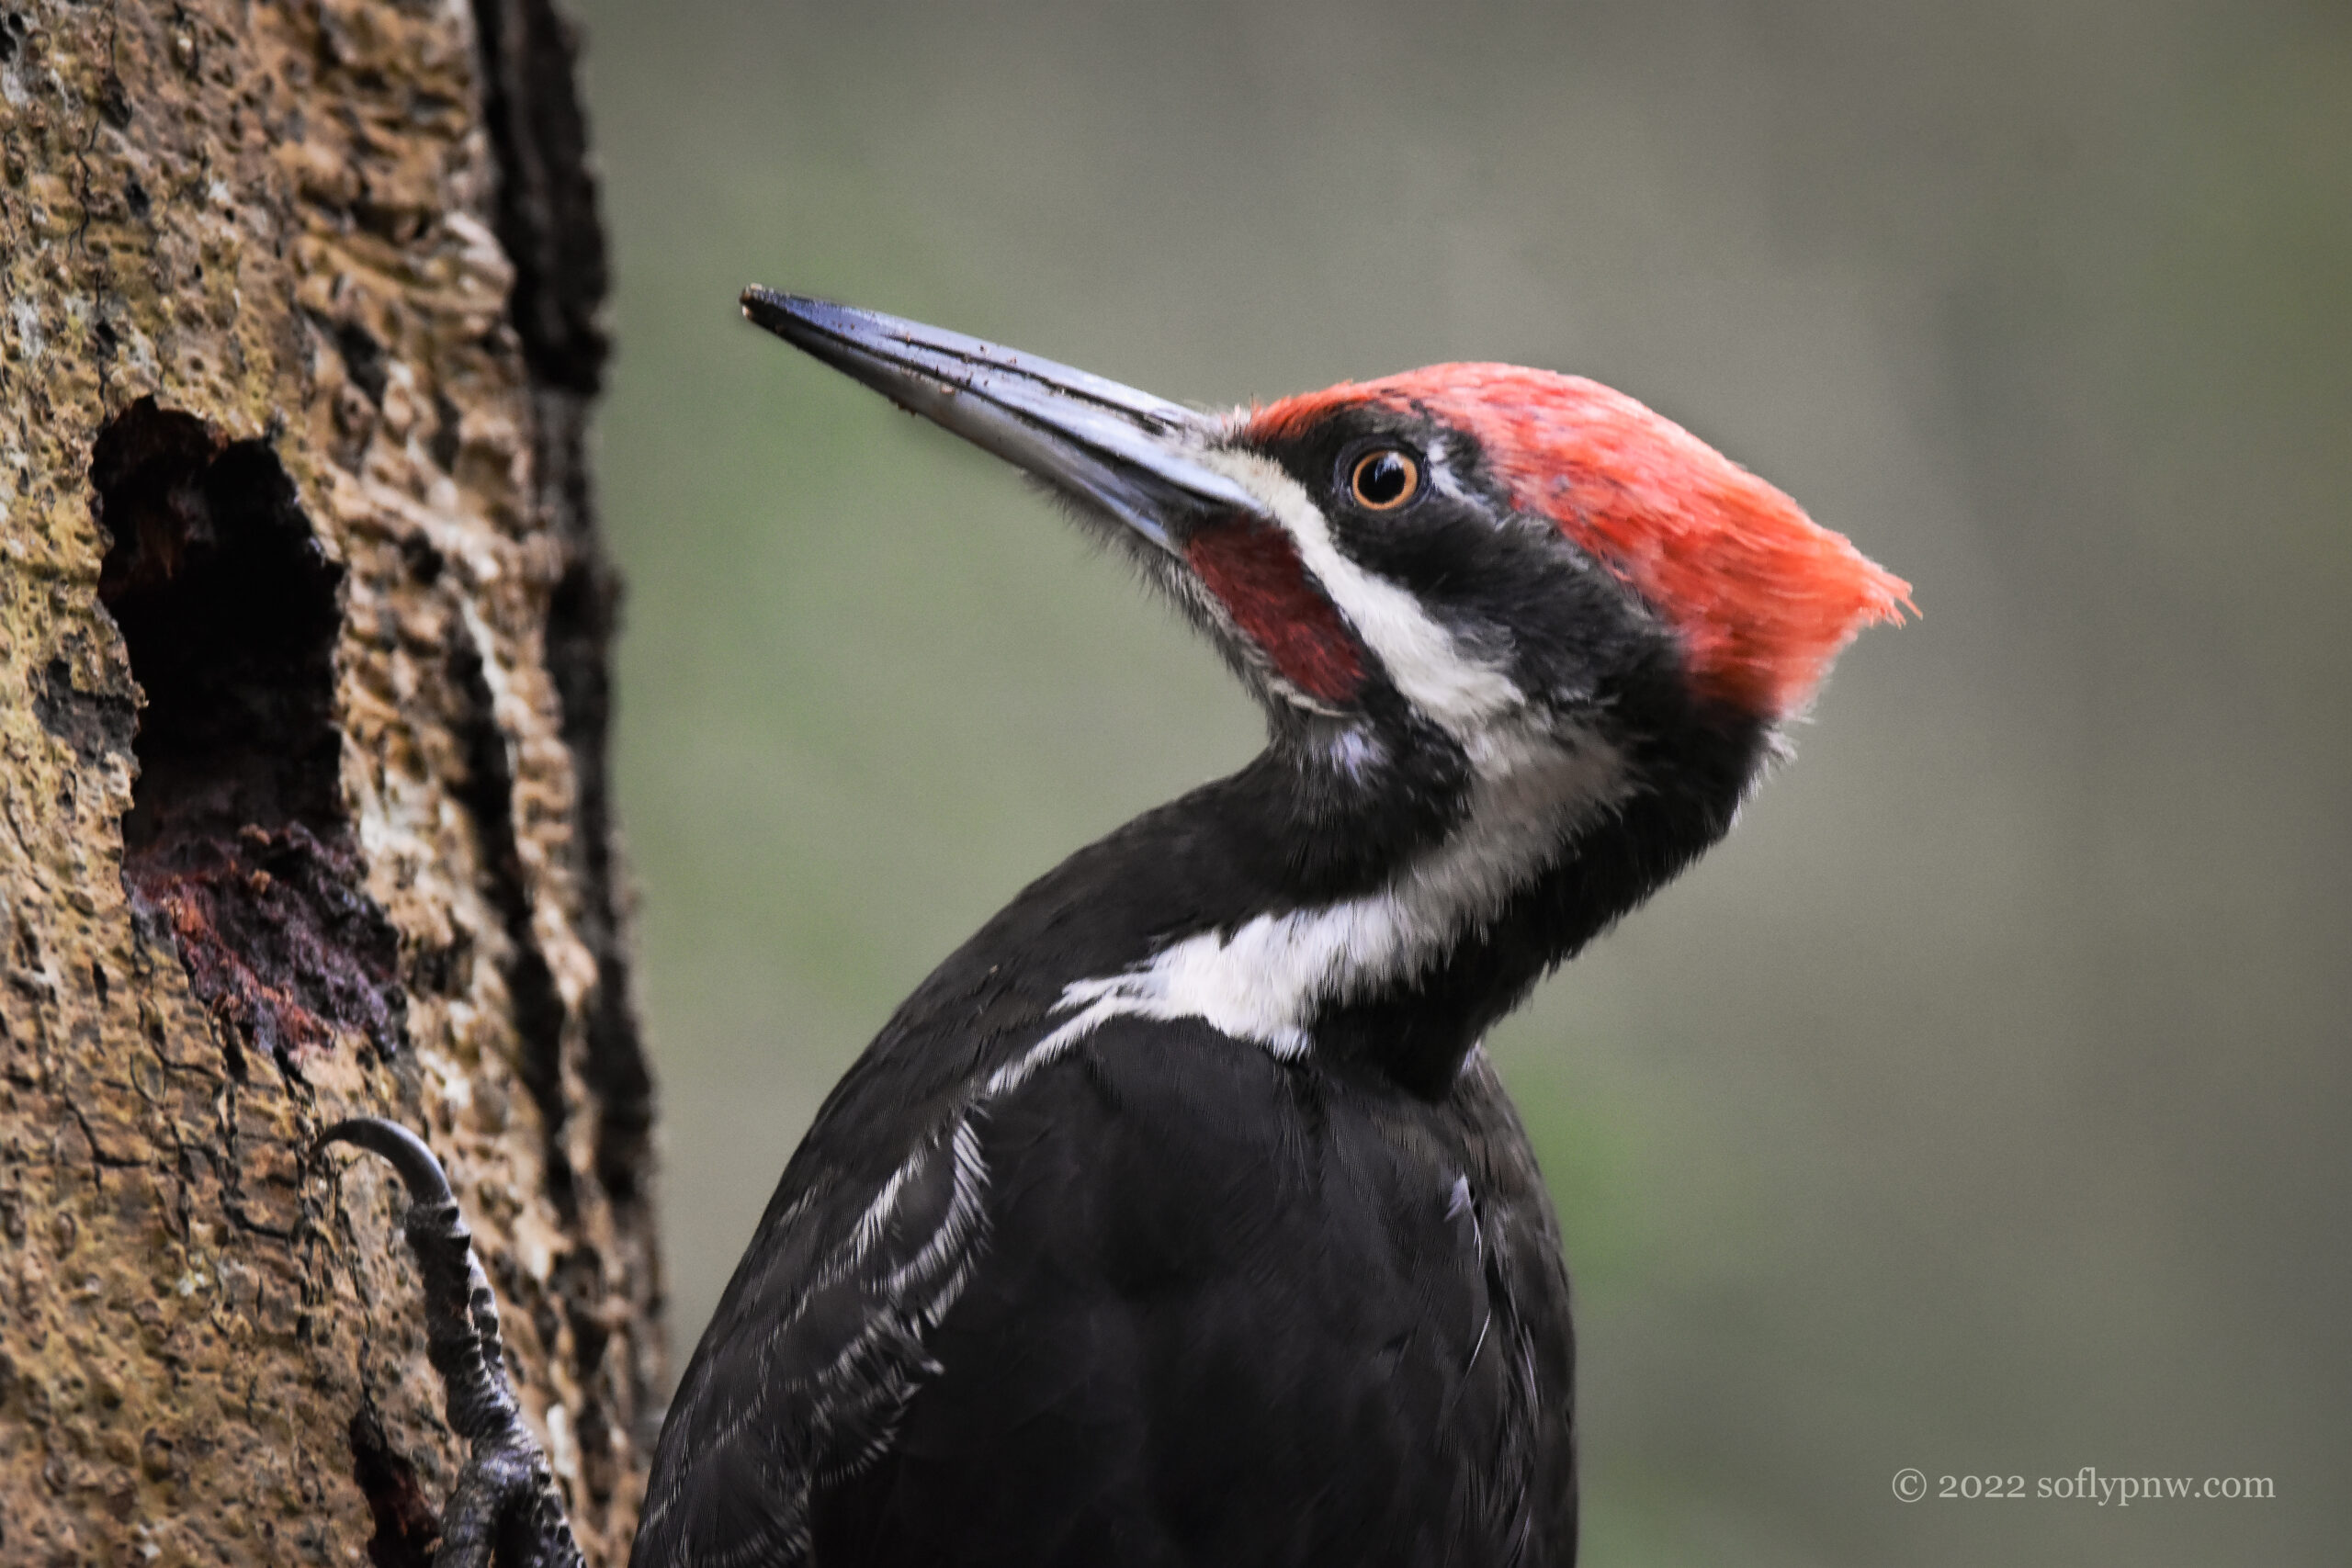 Closeup image of a pileated woodpecker head